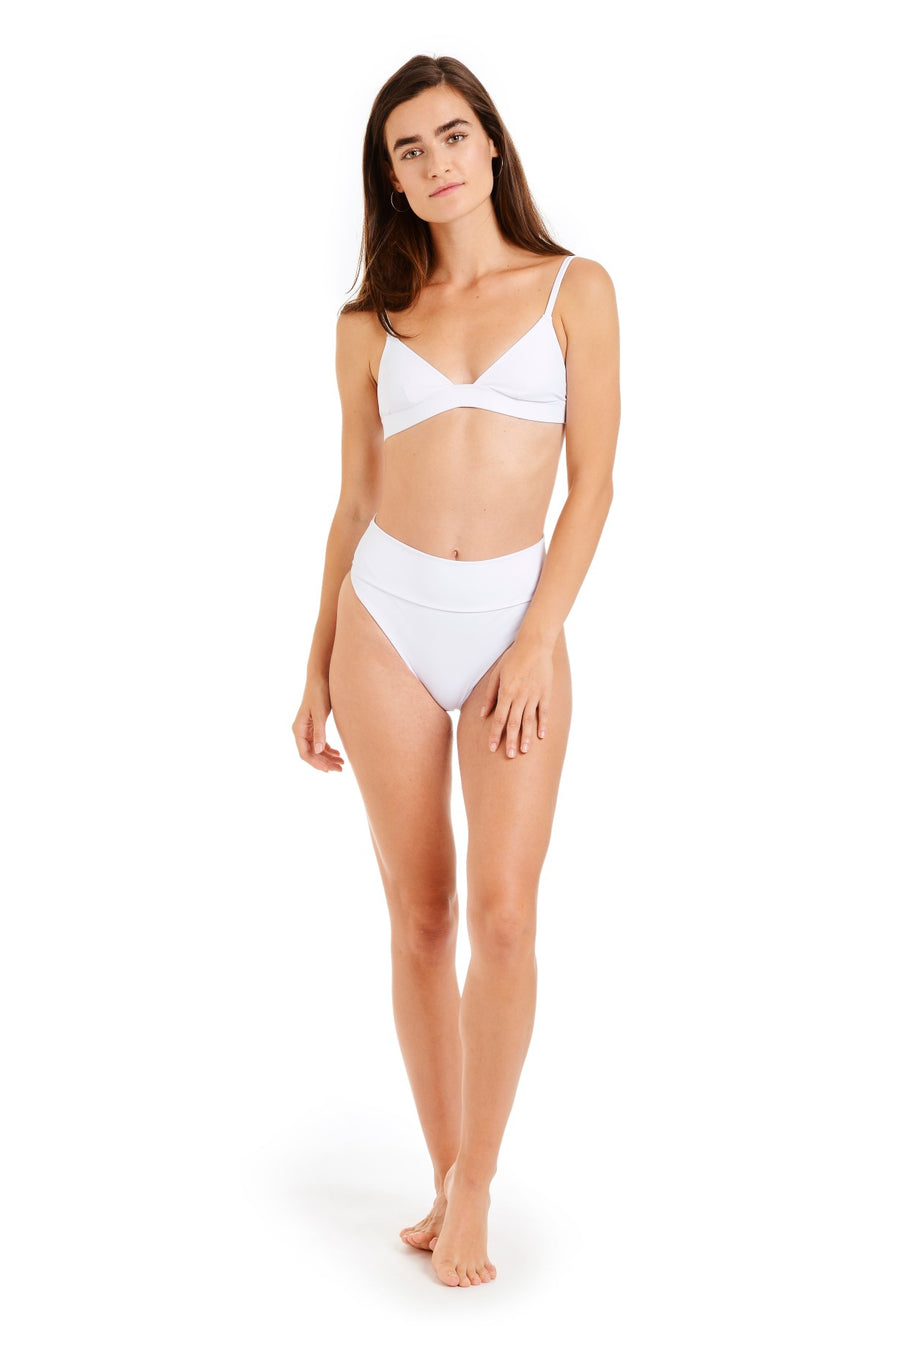 Front view of a woman wearing a white bikini top